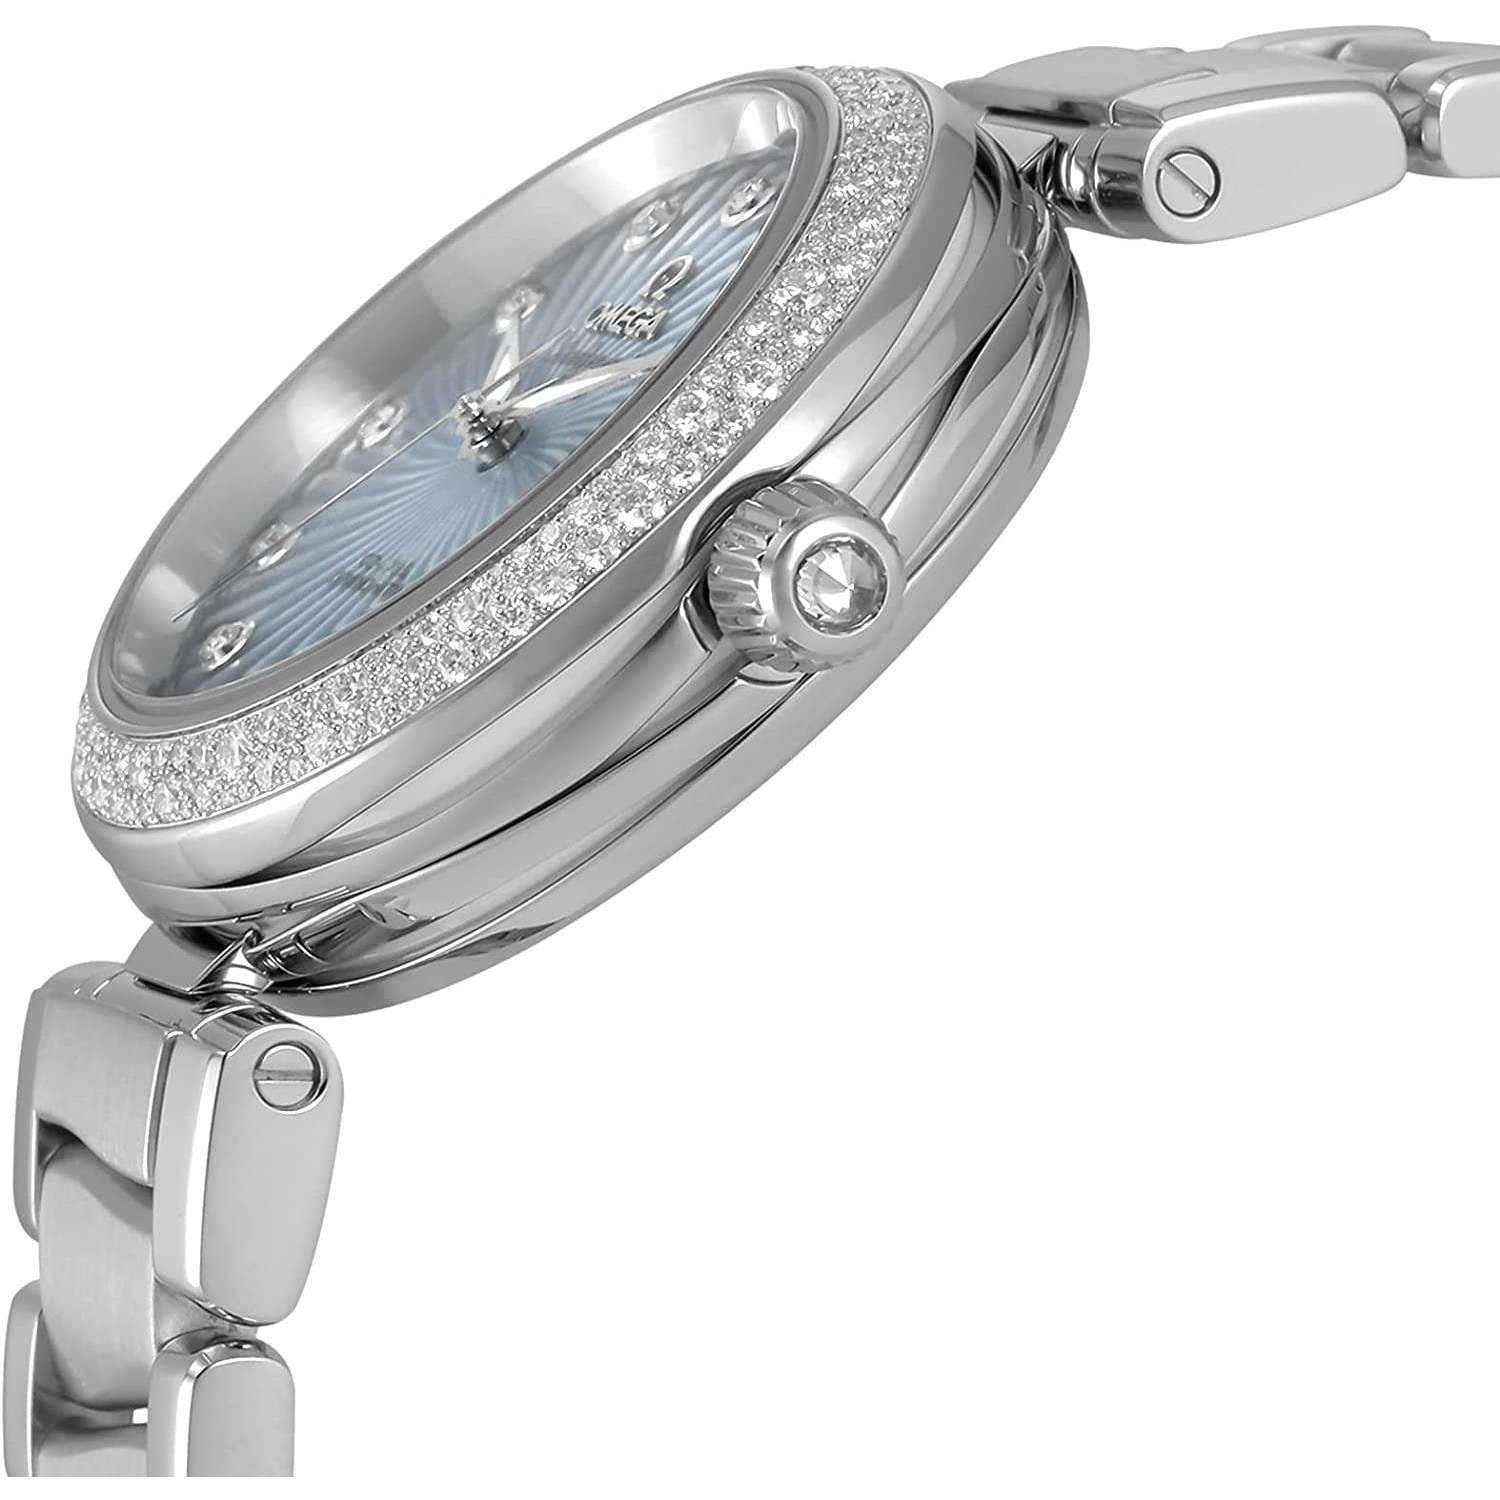 ROOK JAPAN:OMEGA DE VILLE LADYMATIC CO-AXIAL CHRONOMETER 34 MM WOMEN WATCH 425.35.34.20.57.002,Luxury Watch,Omega